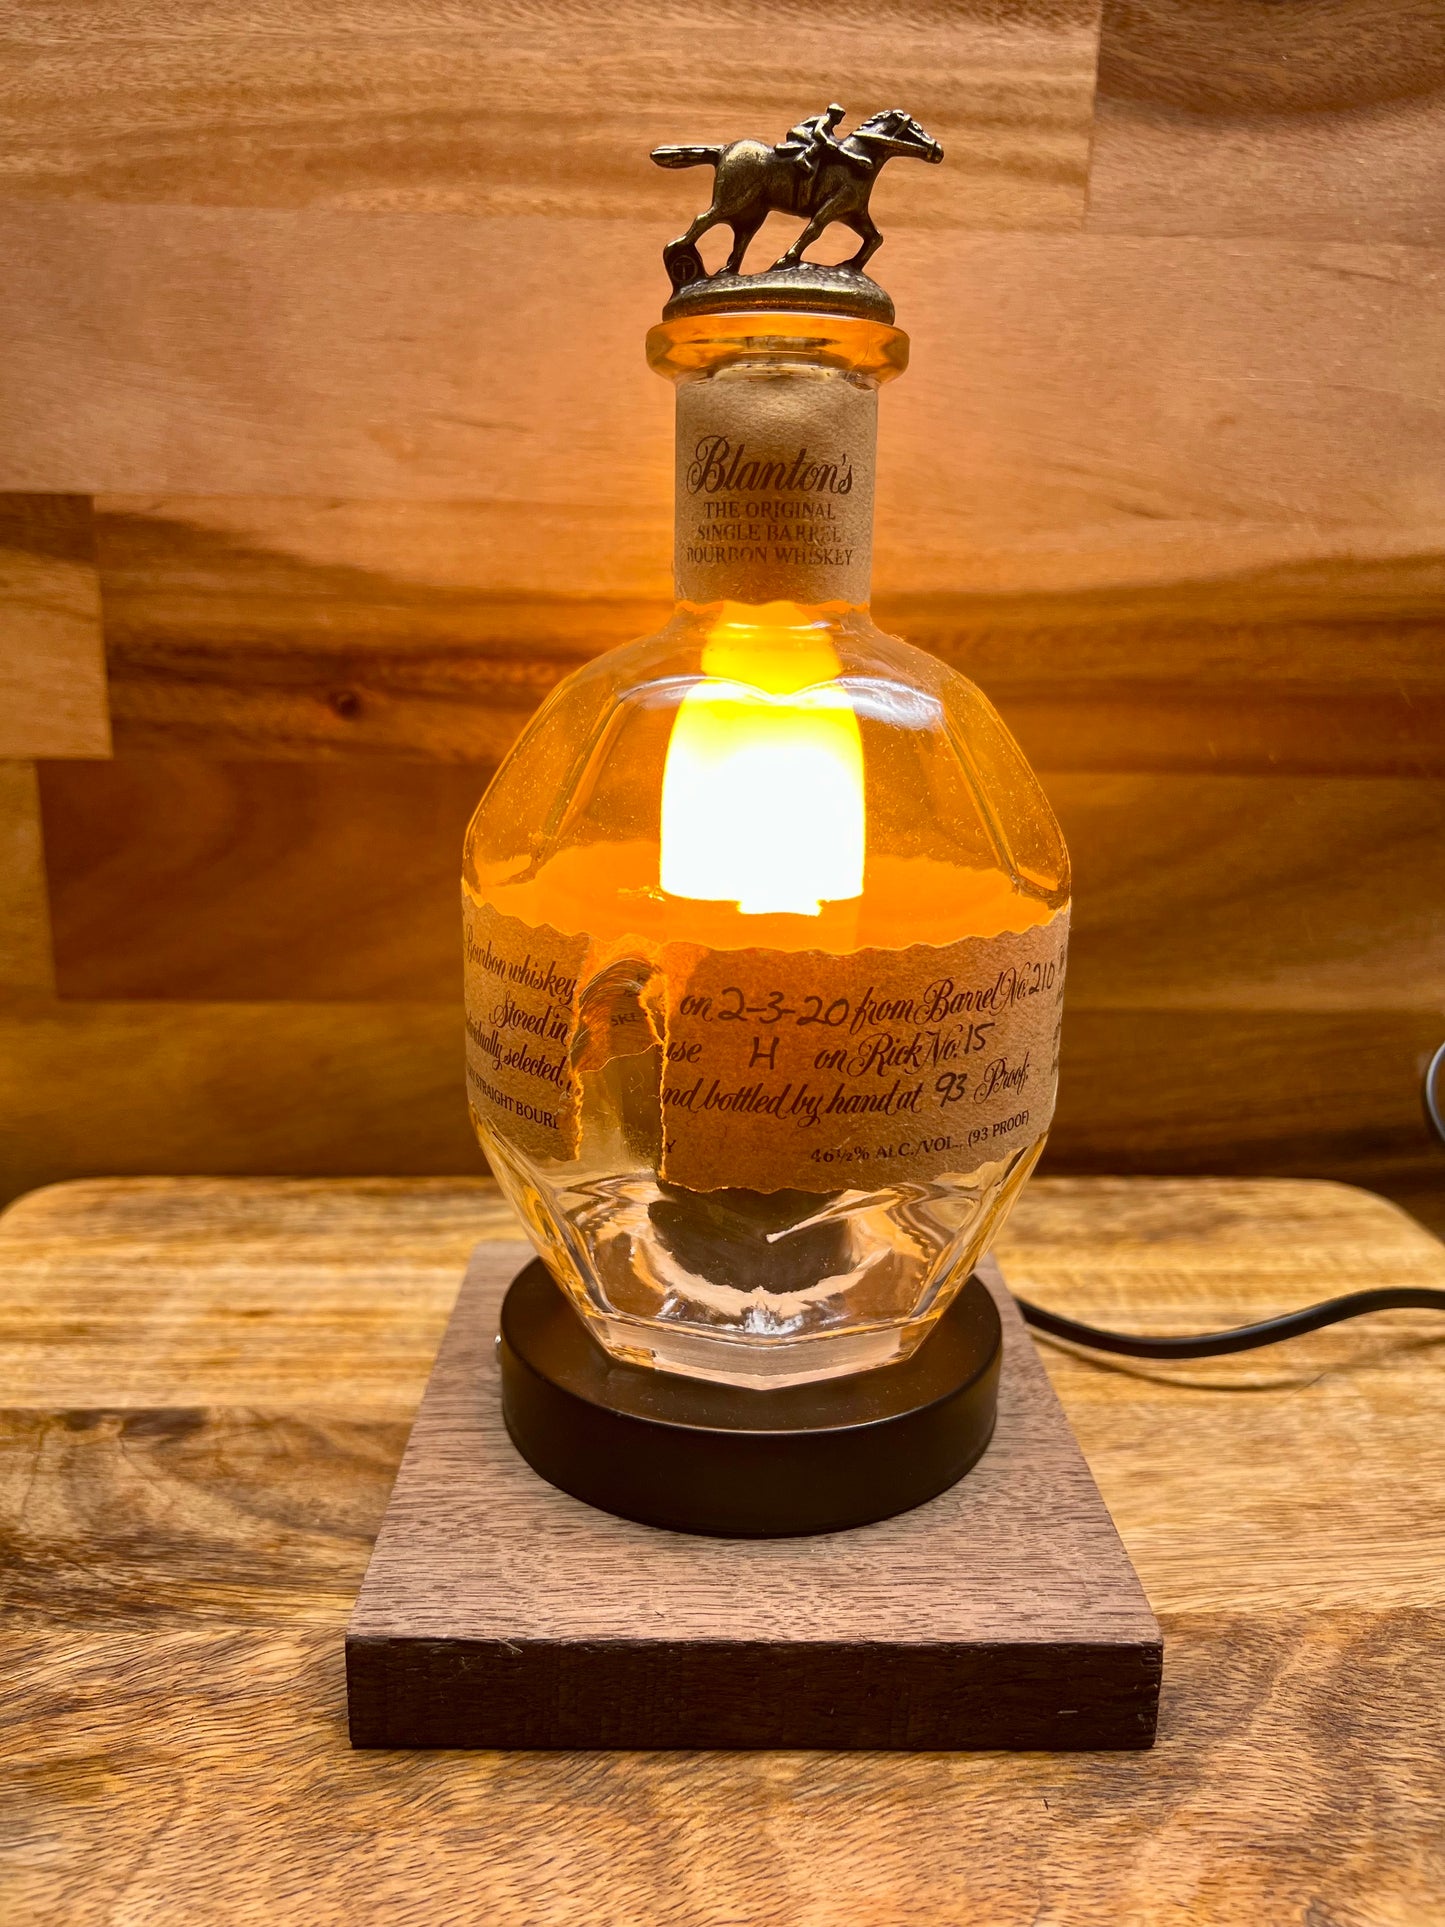 Blanton's Bottle Lamp